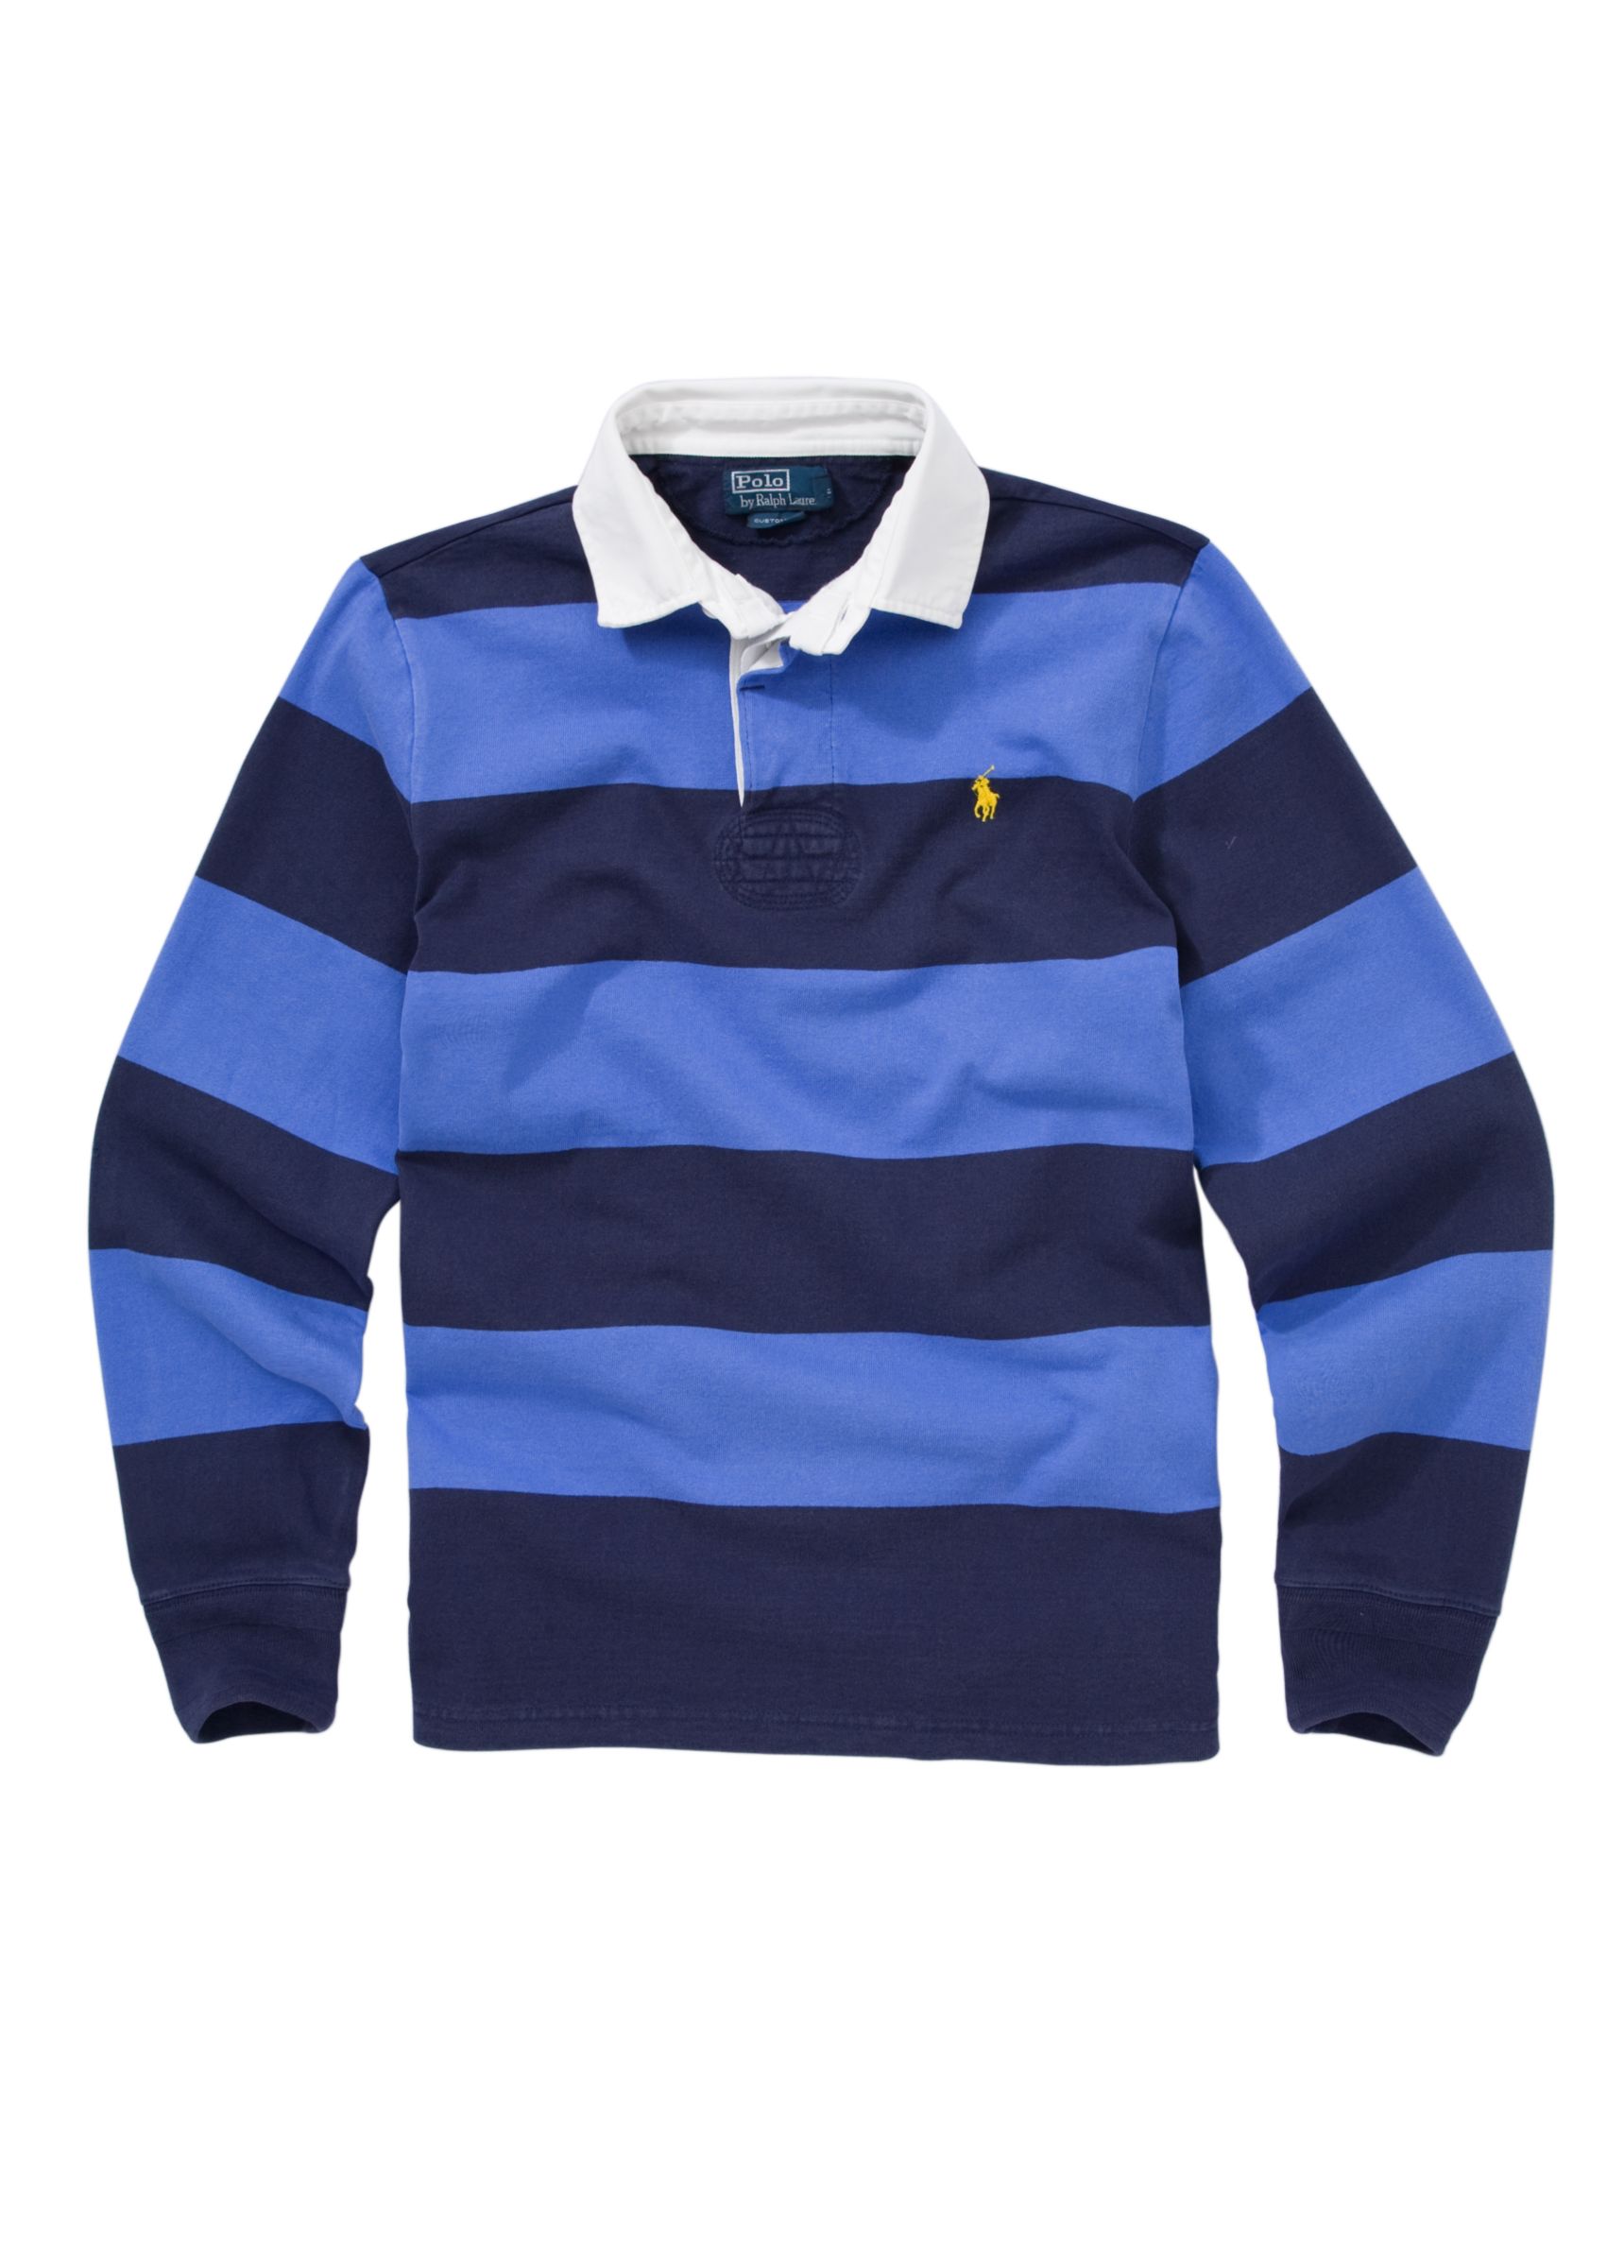 Polo Ralph Lauren Custom Fit Stripe Rugby Shirt,